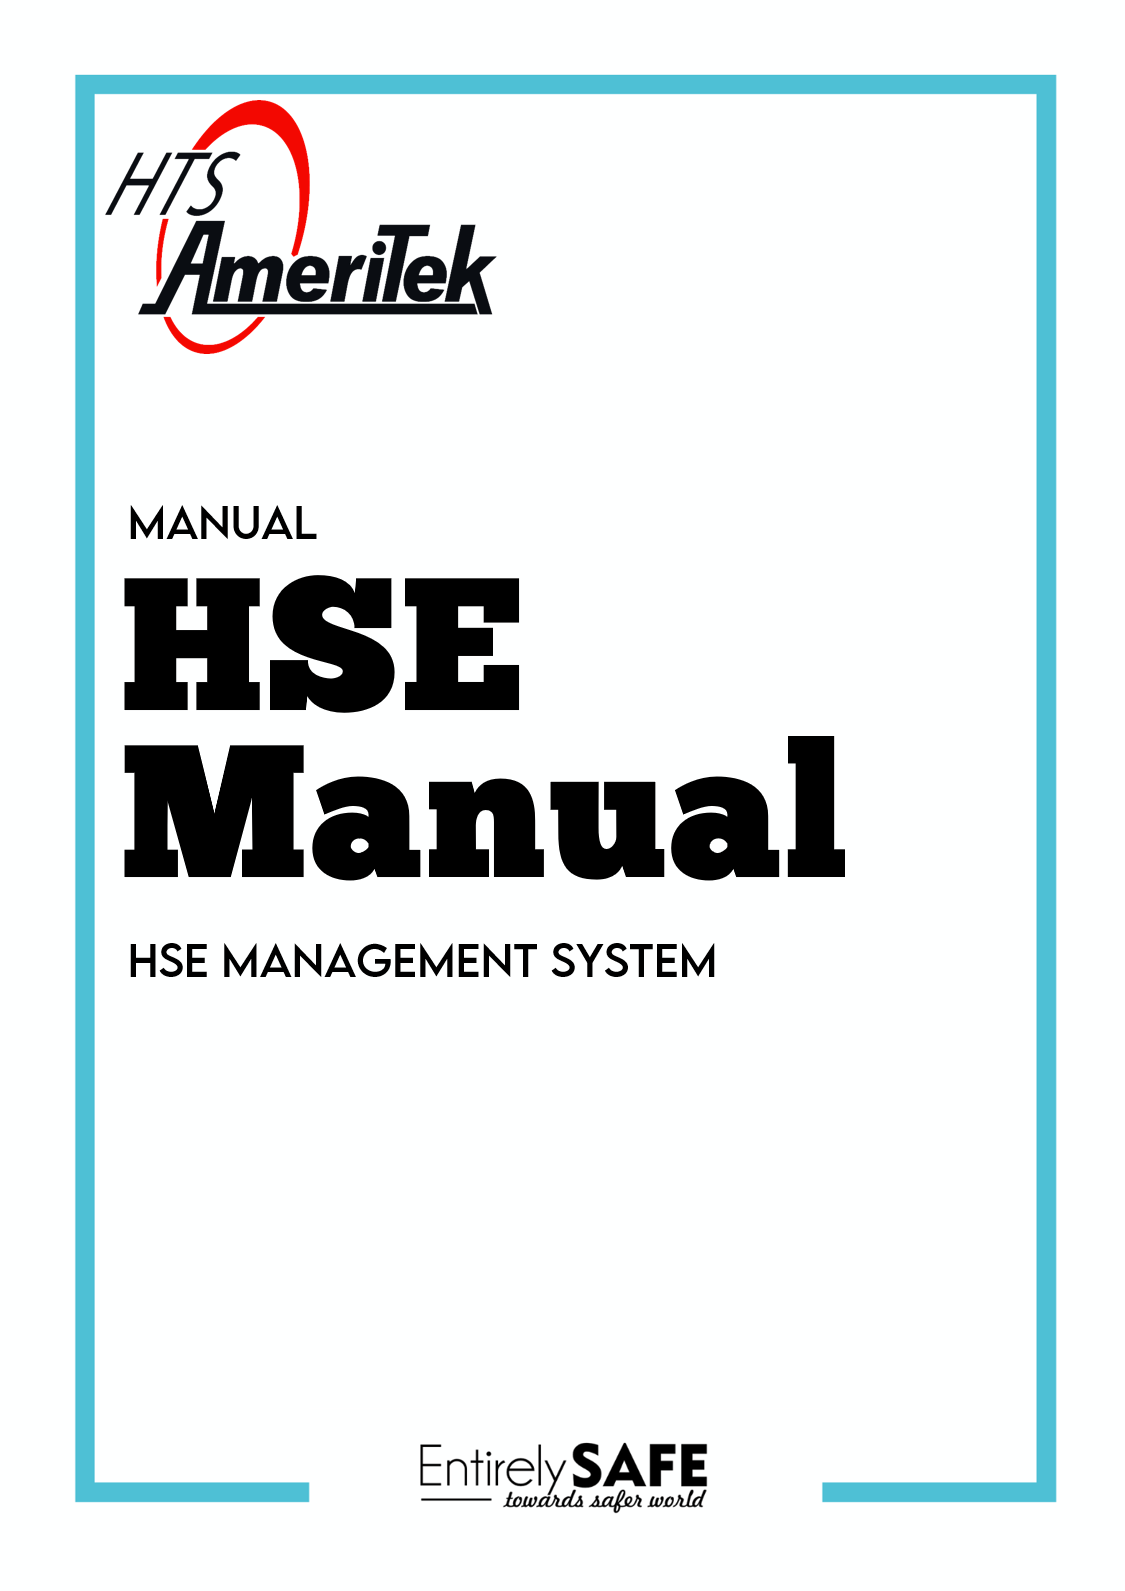 HSE Manual Ameritek